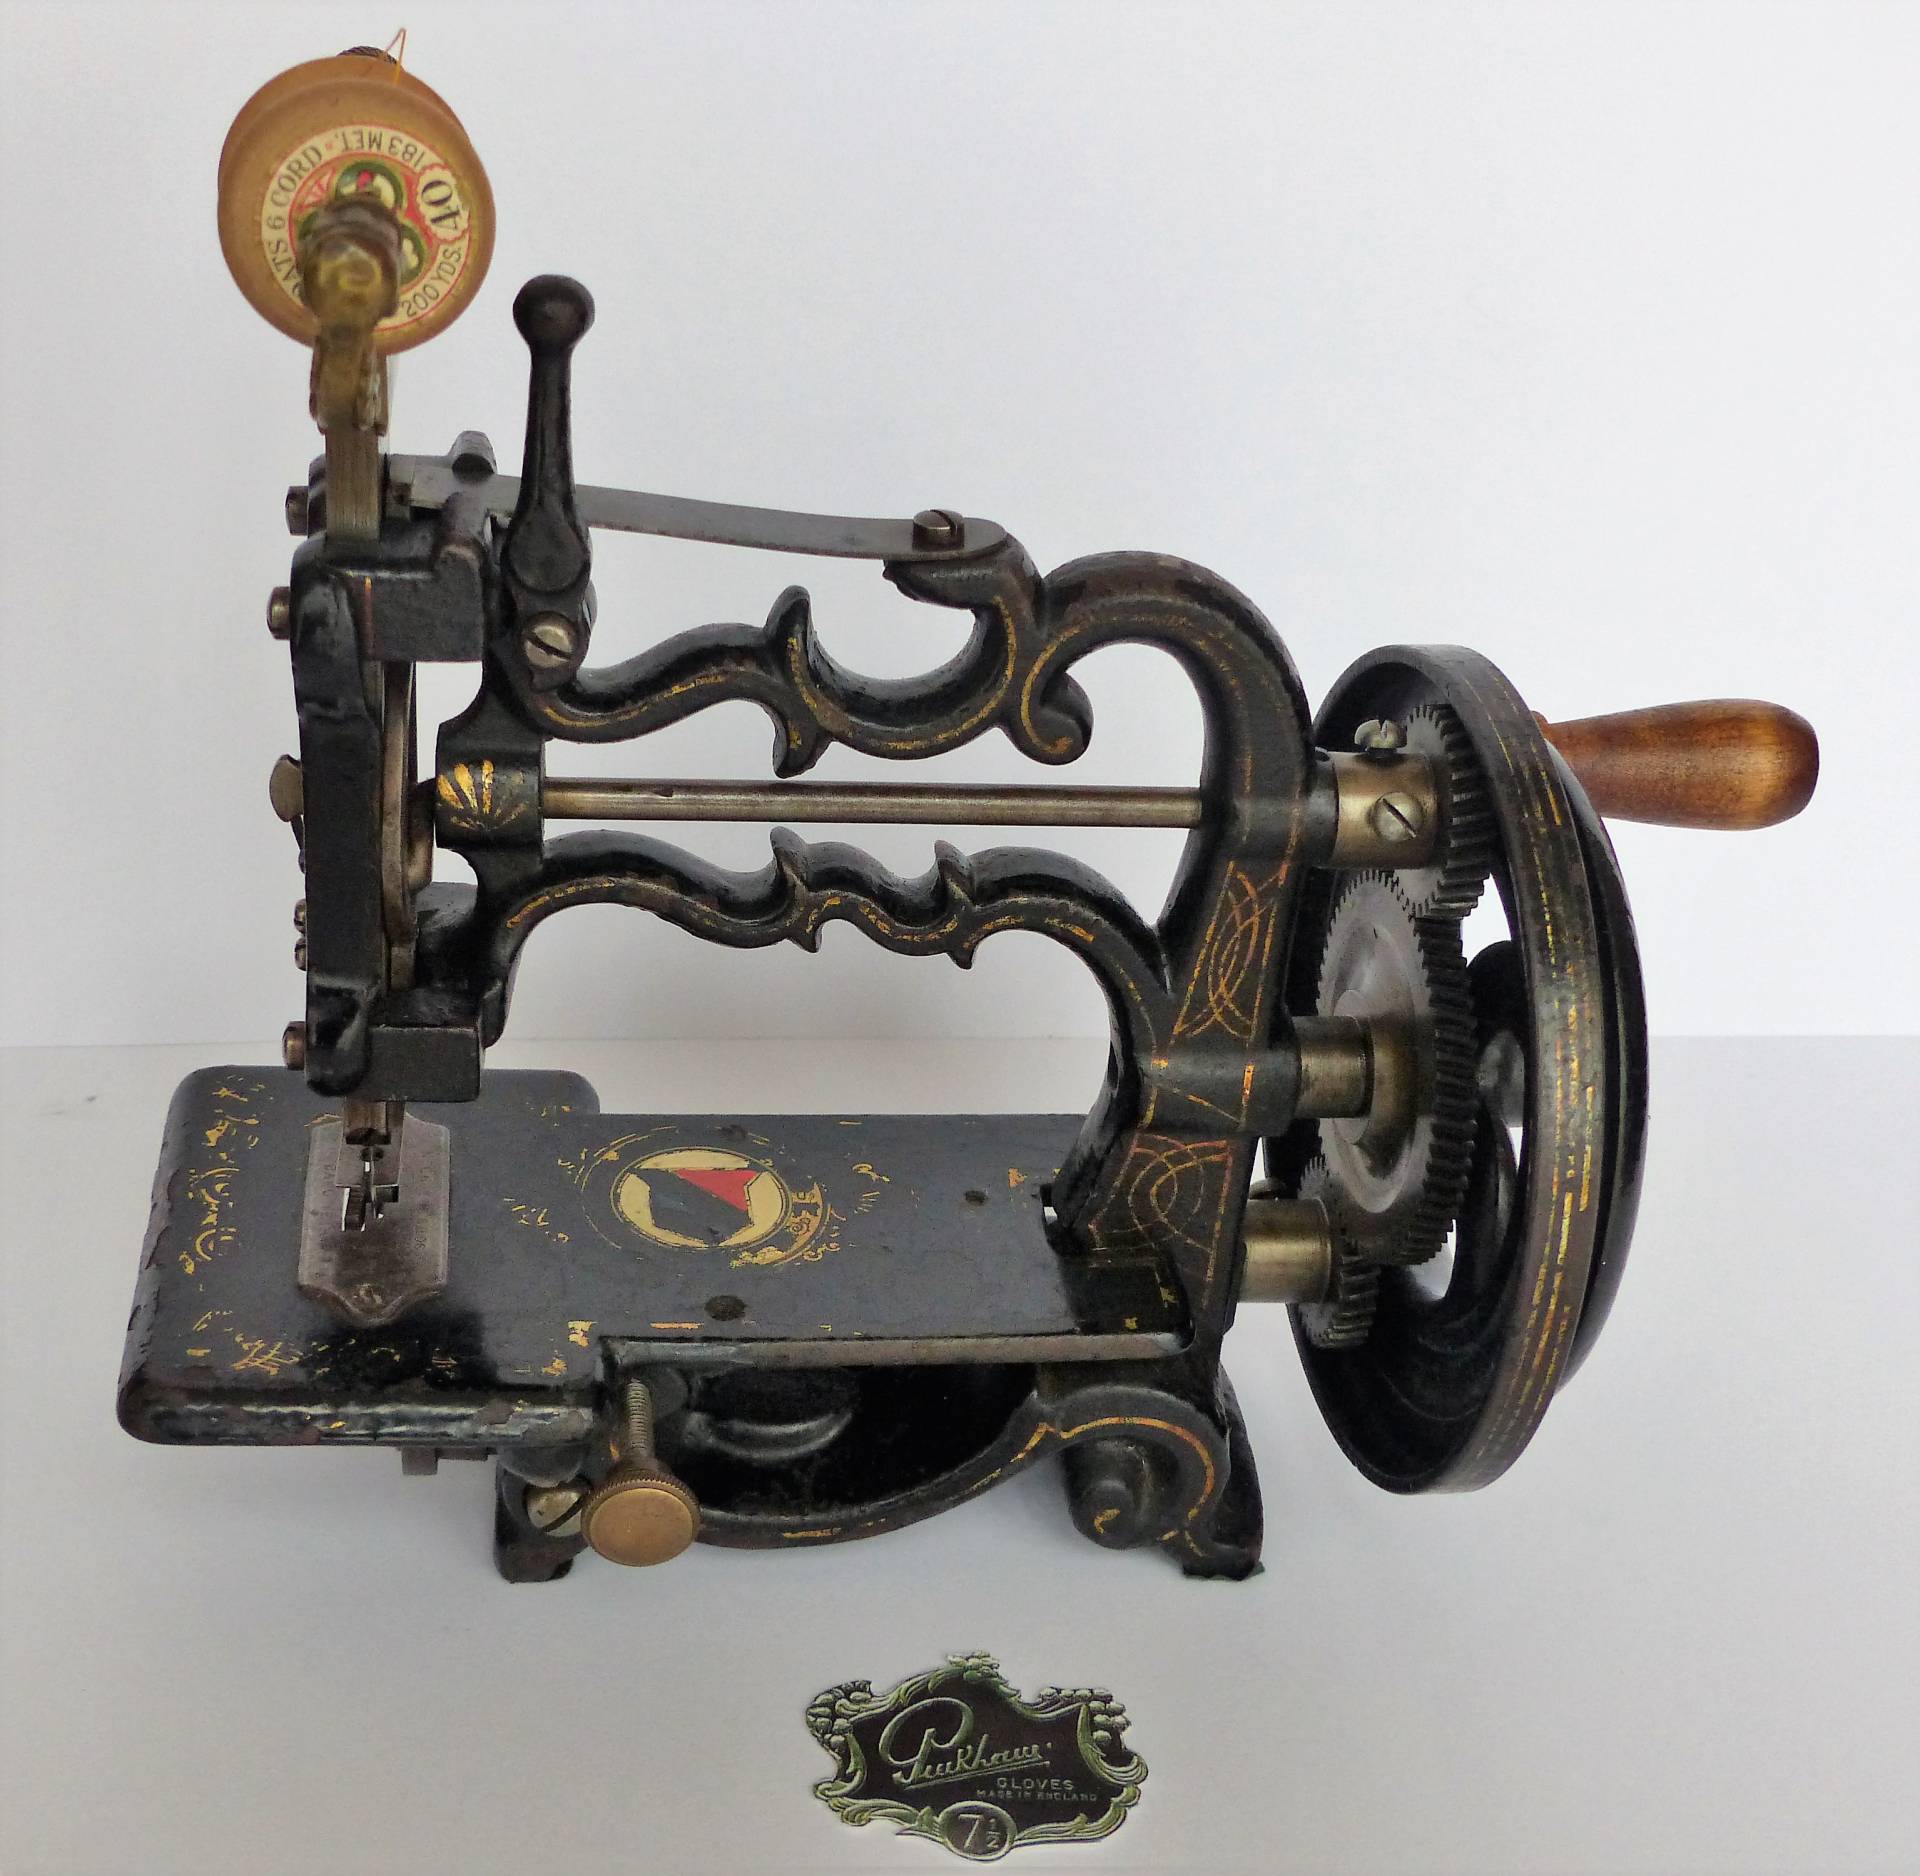 The 1867 Weir 55s Sewing machine